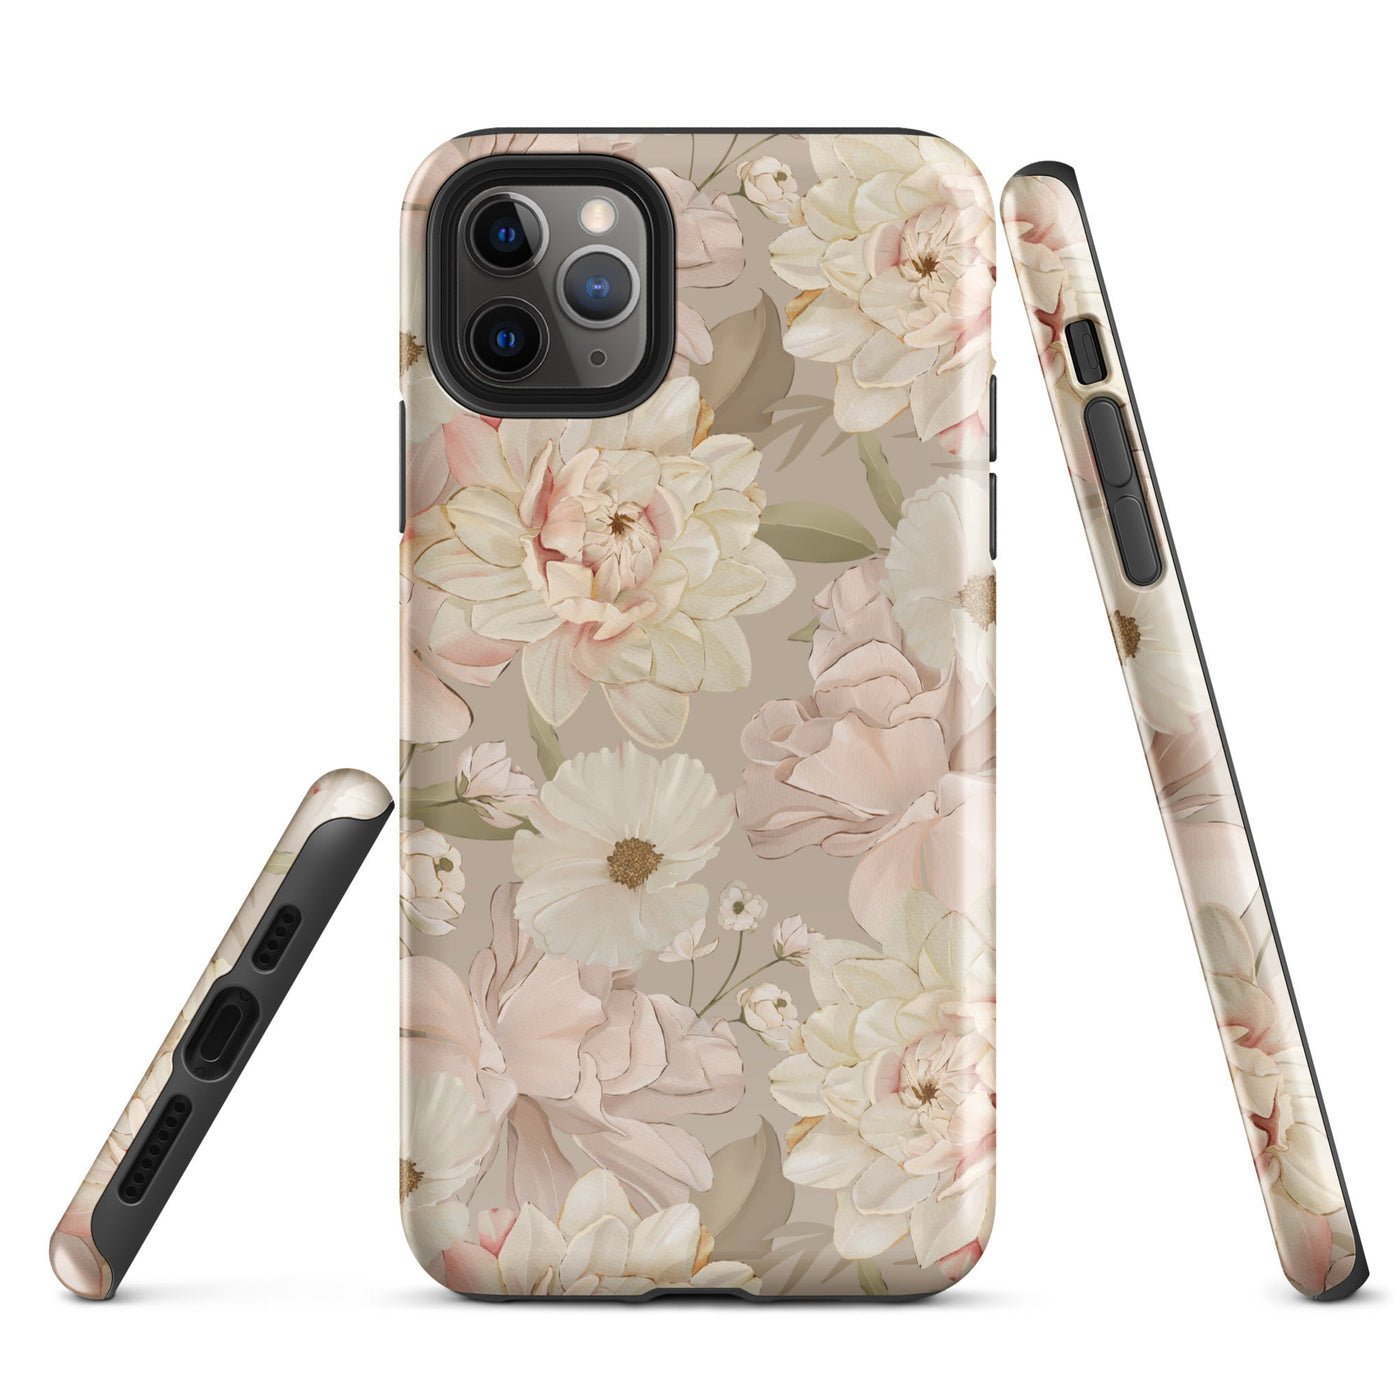 Tough iPhone Case in Blissful Flower - ALK DESIGNS